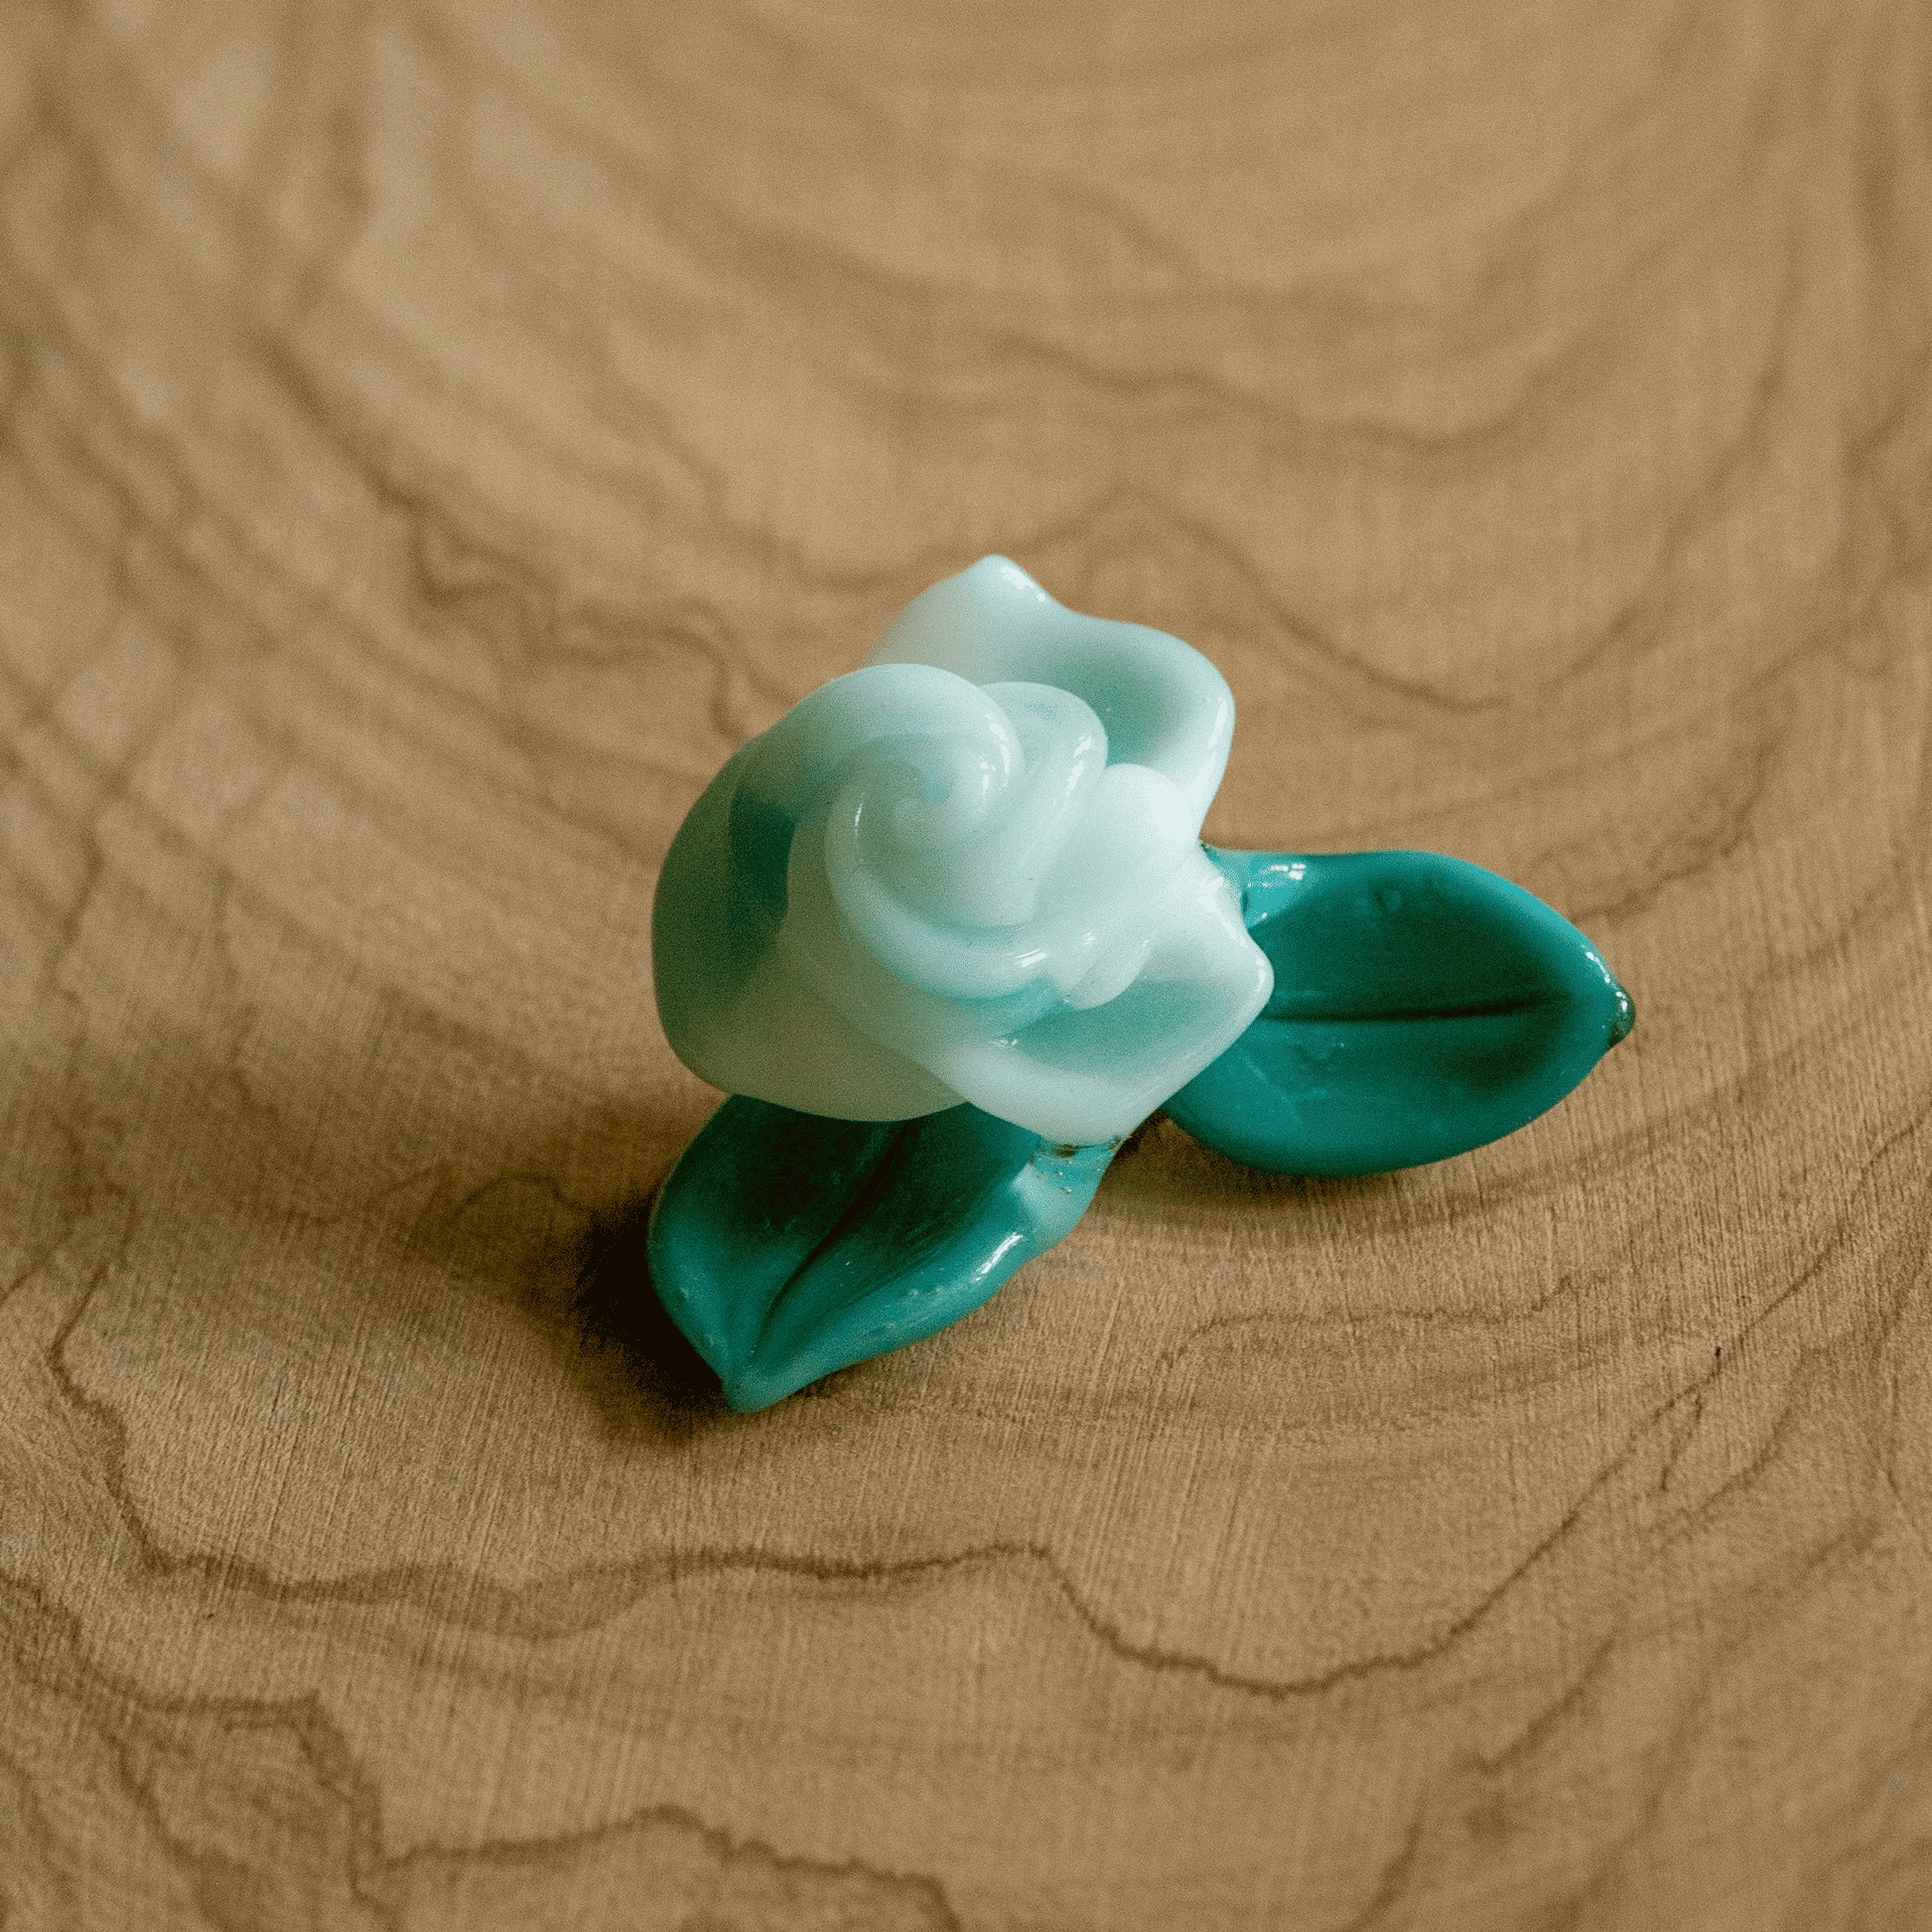 exquisite glass pendant - Blue & White Rose Pendant (A) by Sakibomb